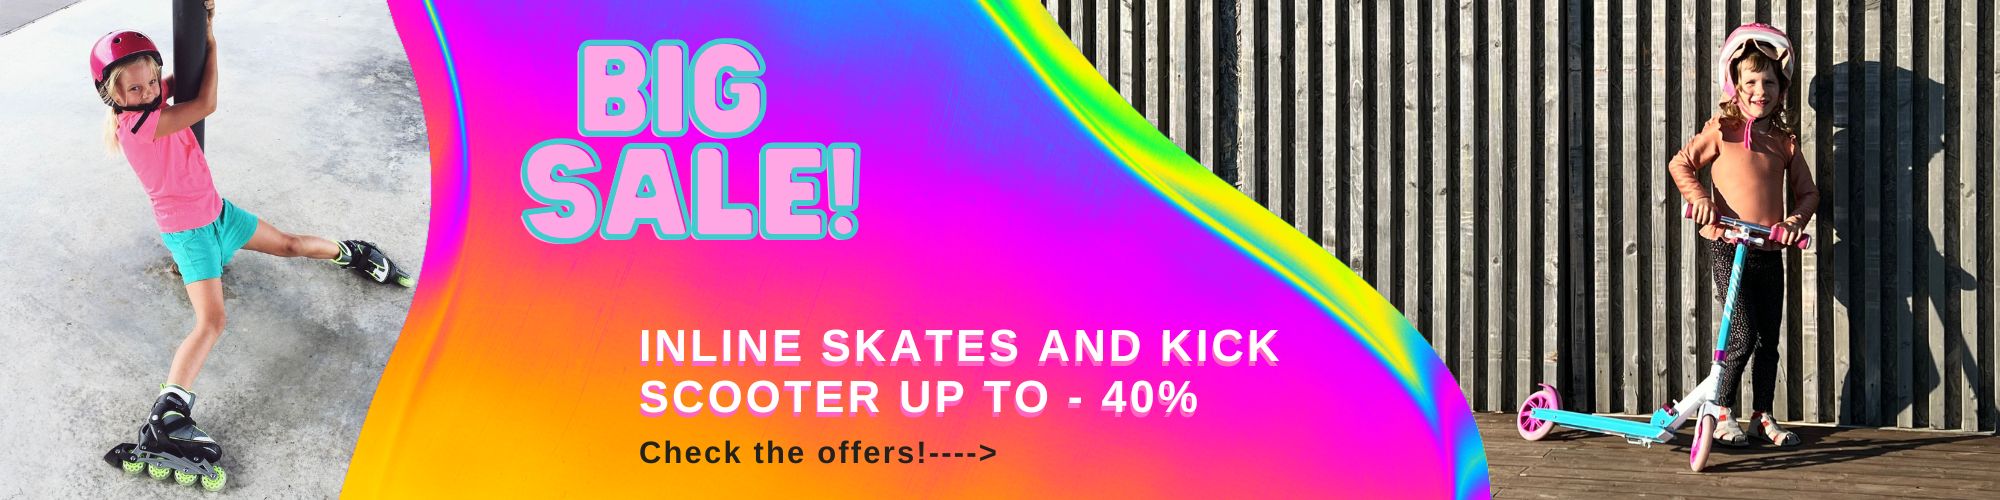 Inline skates big sale!